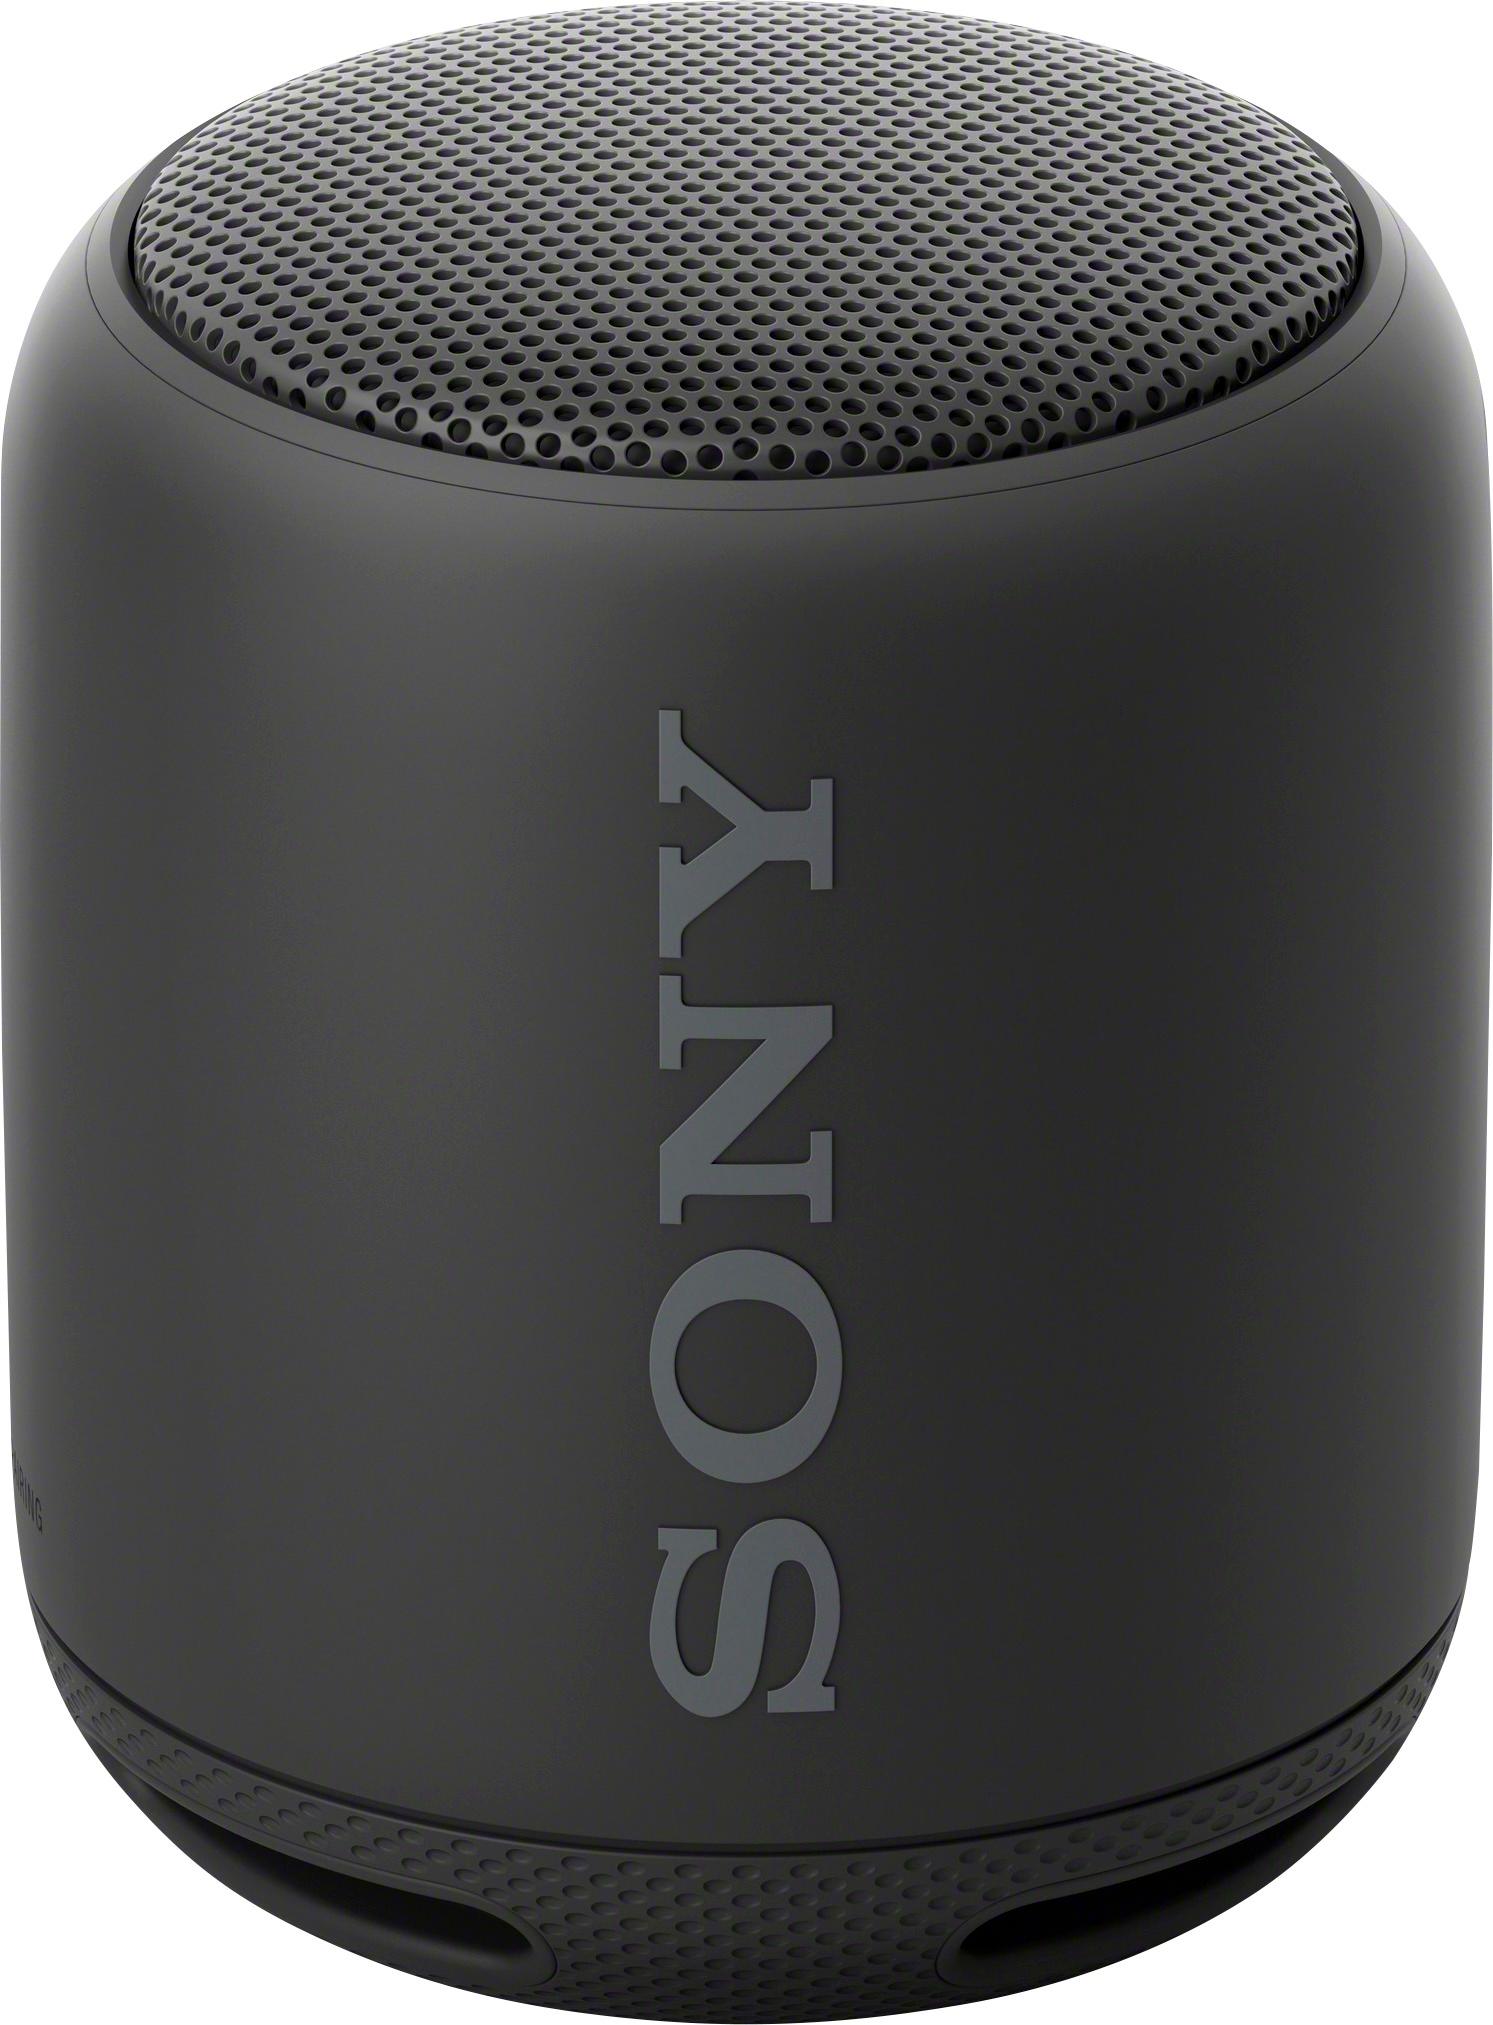 Sony XB10 Portable Bluetooth Speaker Black SRSXB10/BLK - Best Buy